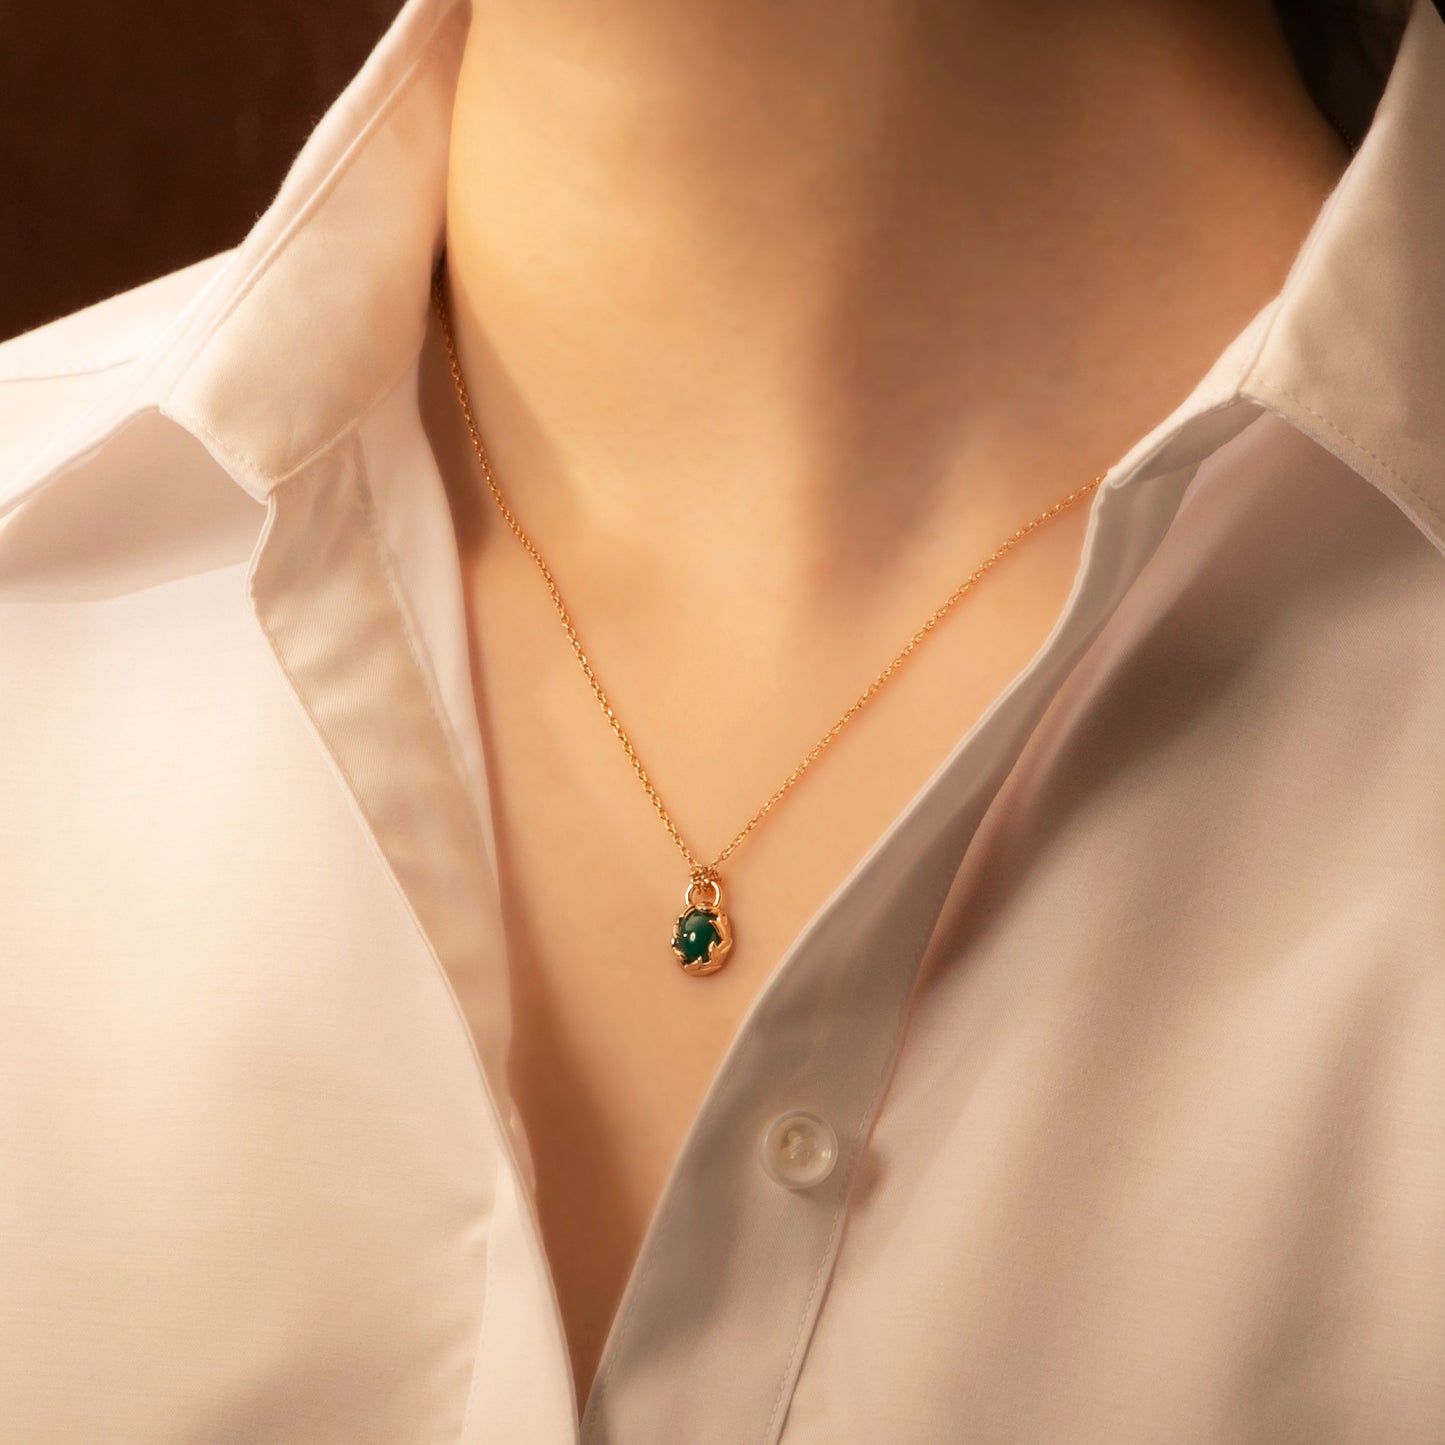 Erwin's pendant：SILVER